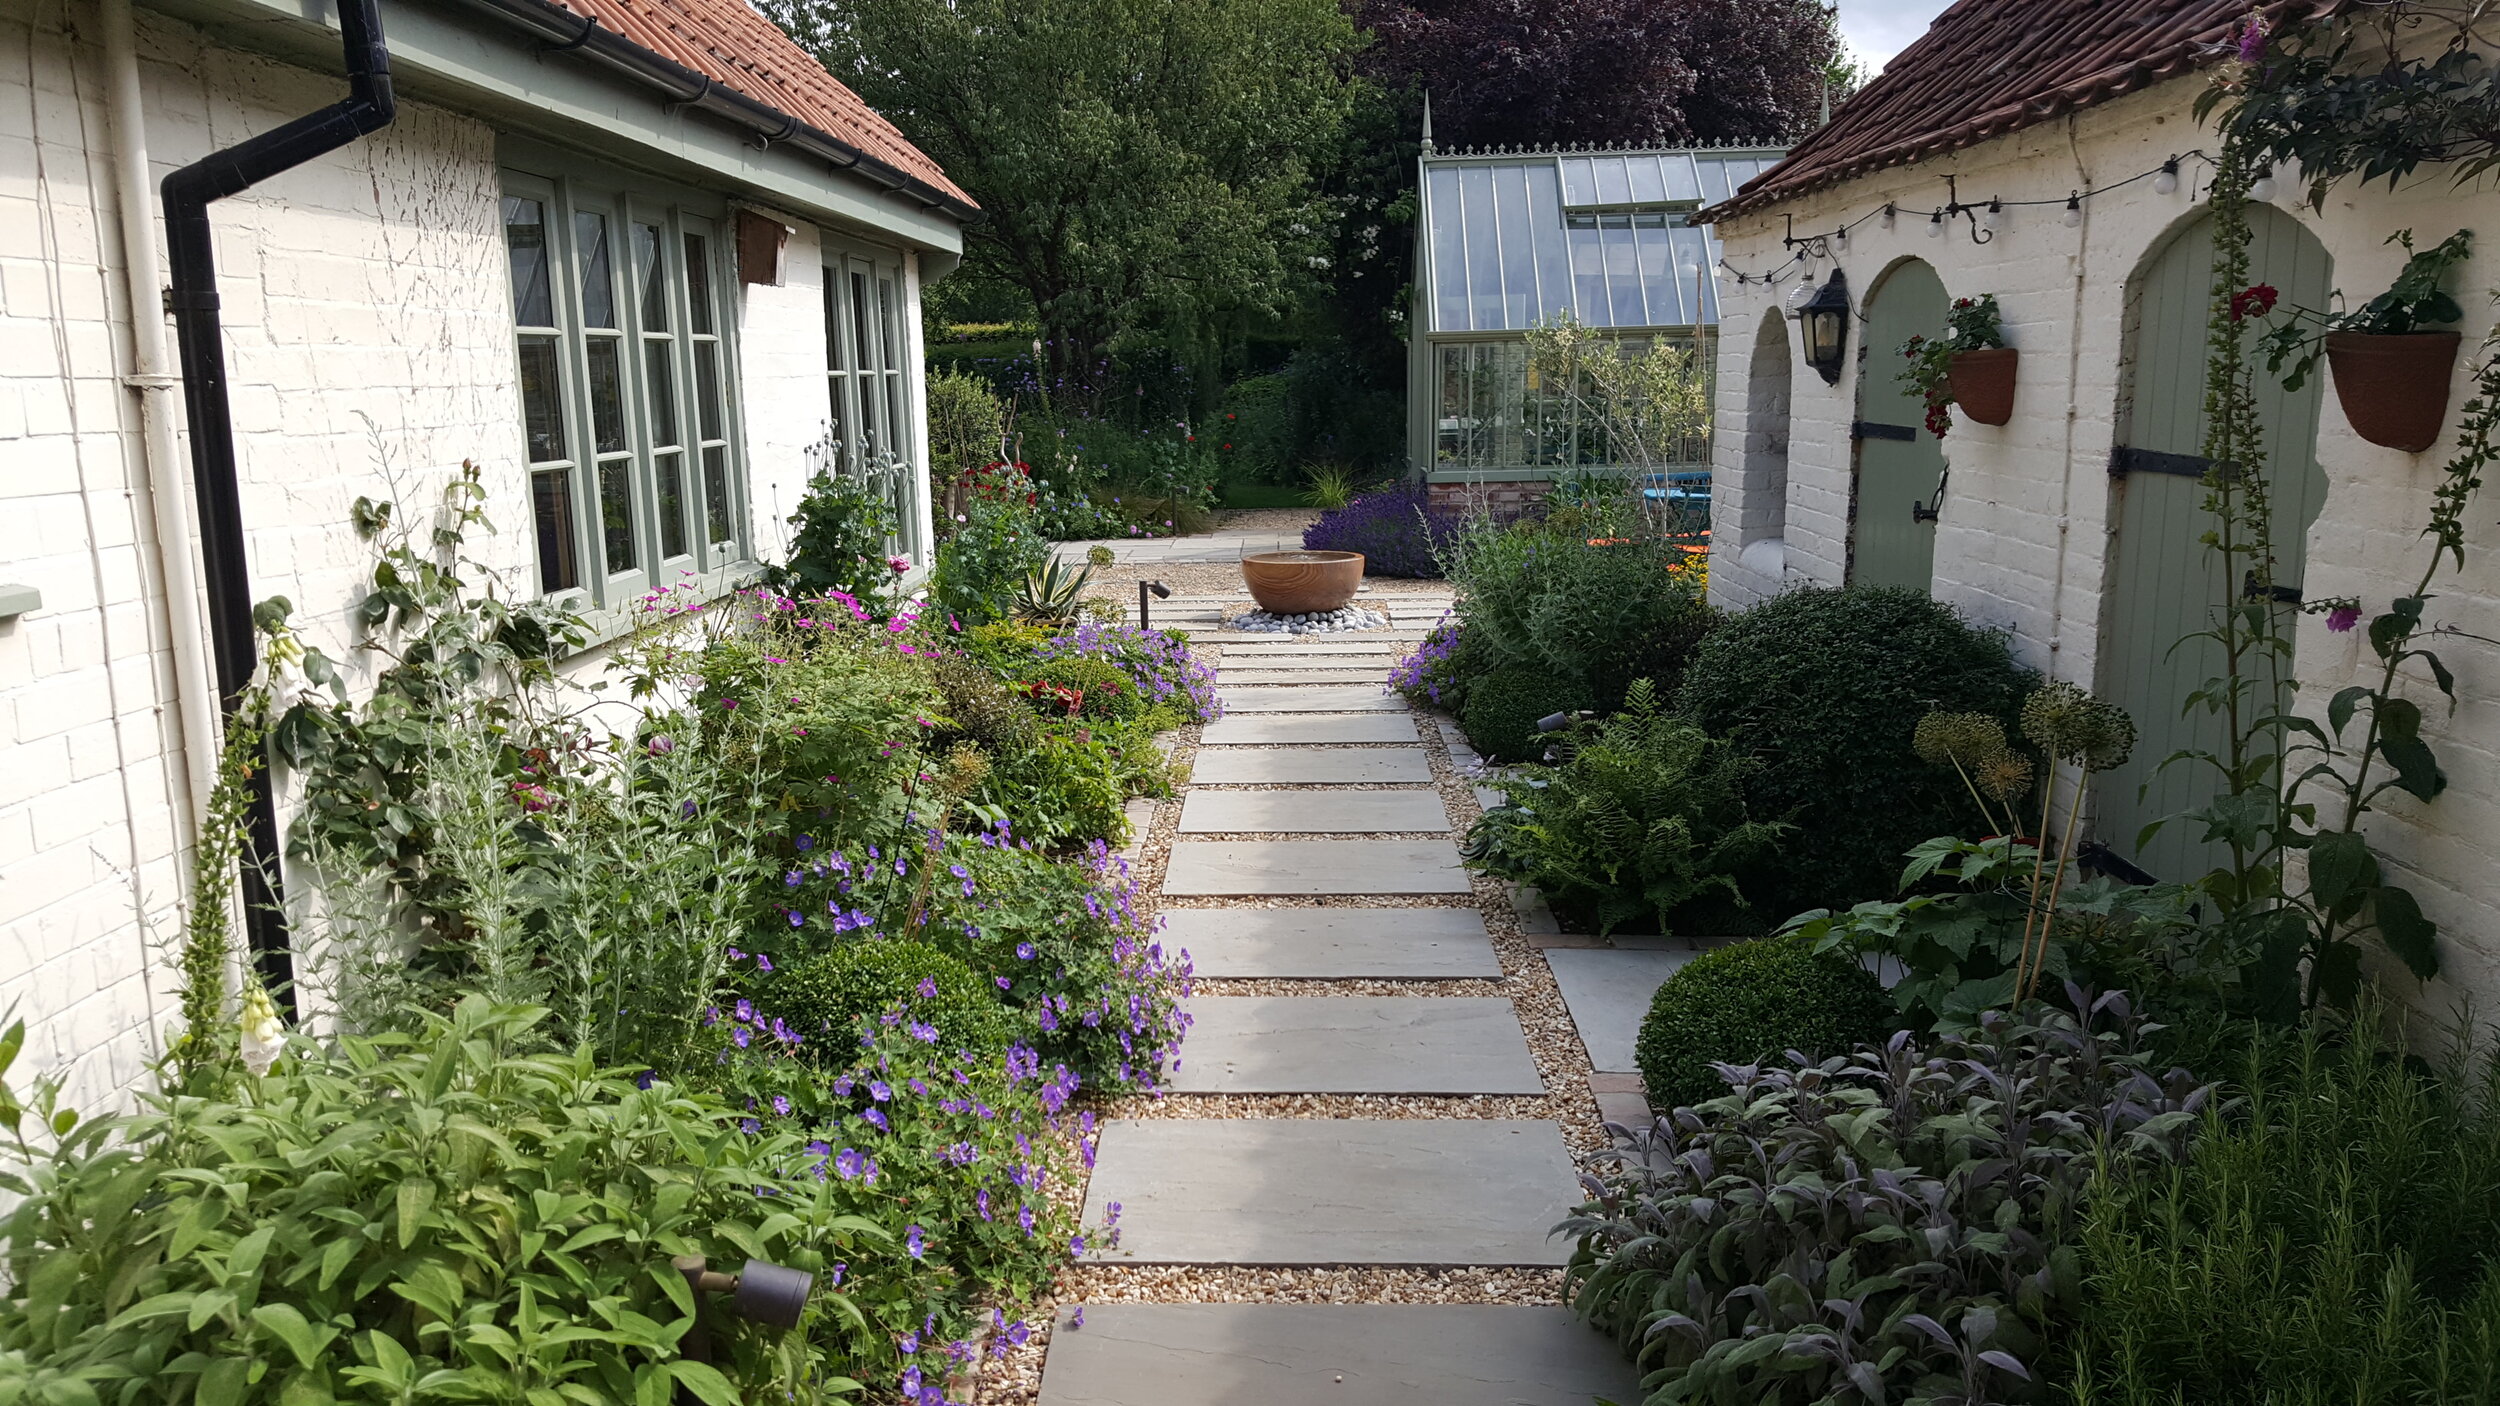 1 Garden design Lincolnshire - stepping stones through planting.jpg